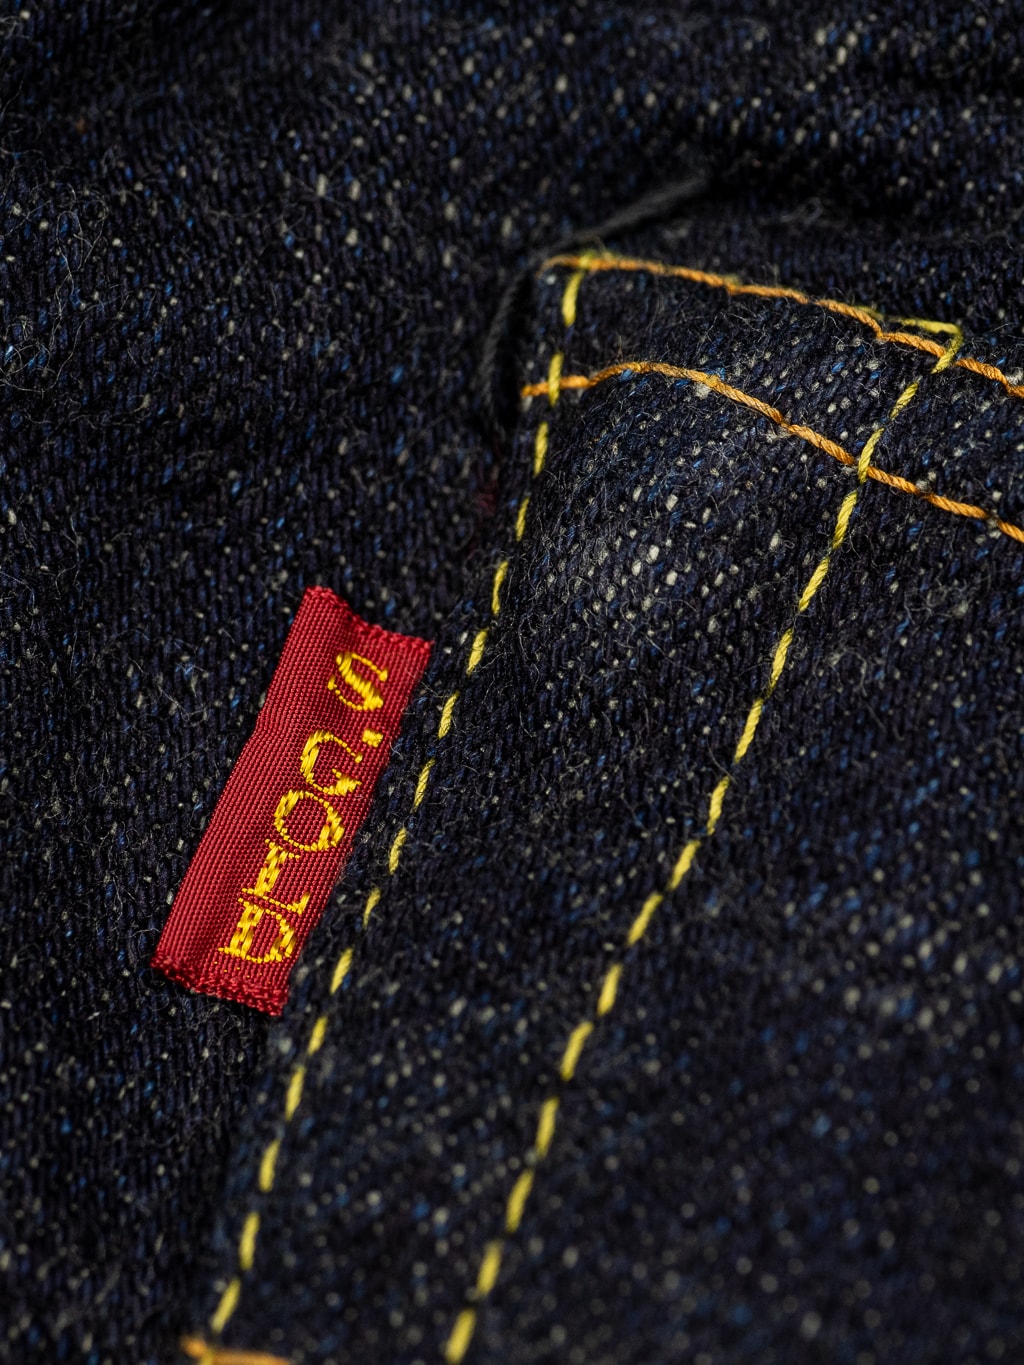 The Strike Gold Slub Weft Slim Jeans fit brand red tab